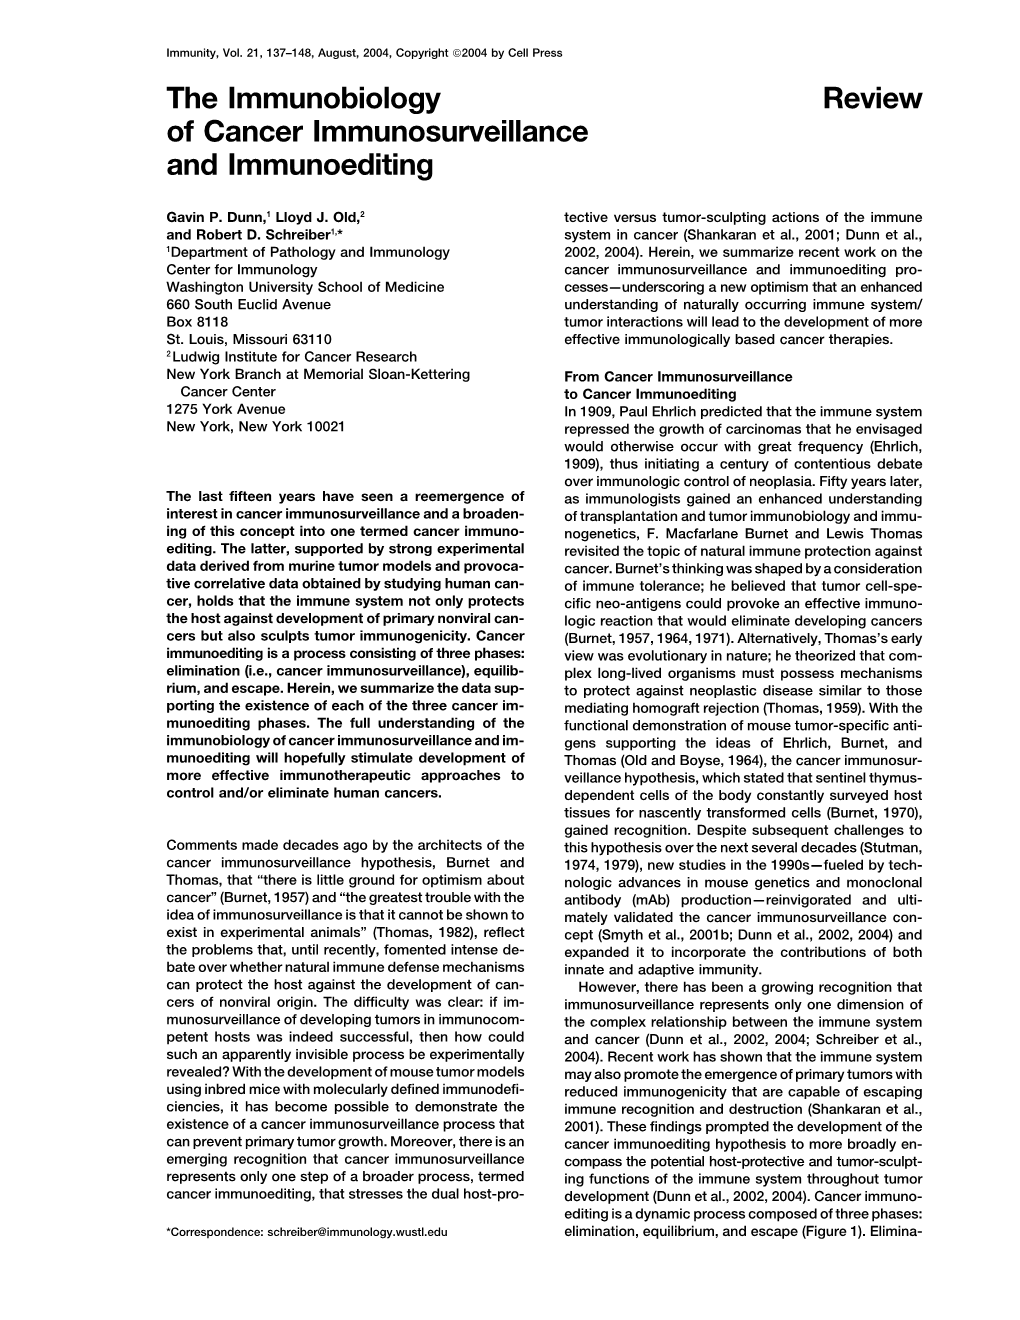 Review the Immunobiology of Cancer Immunosurveillance and Immunoediting